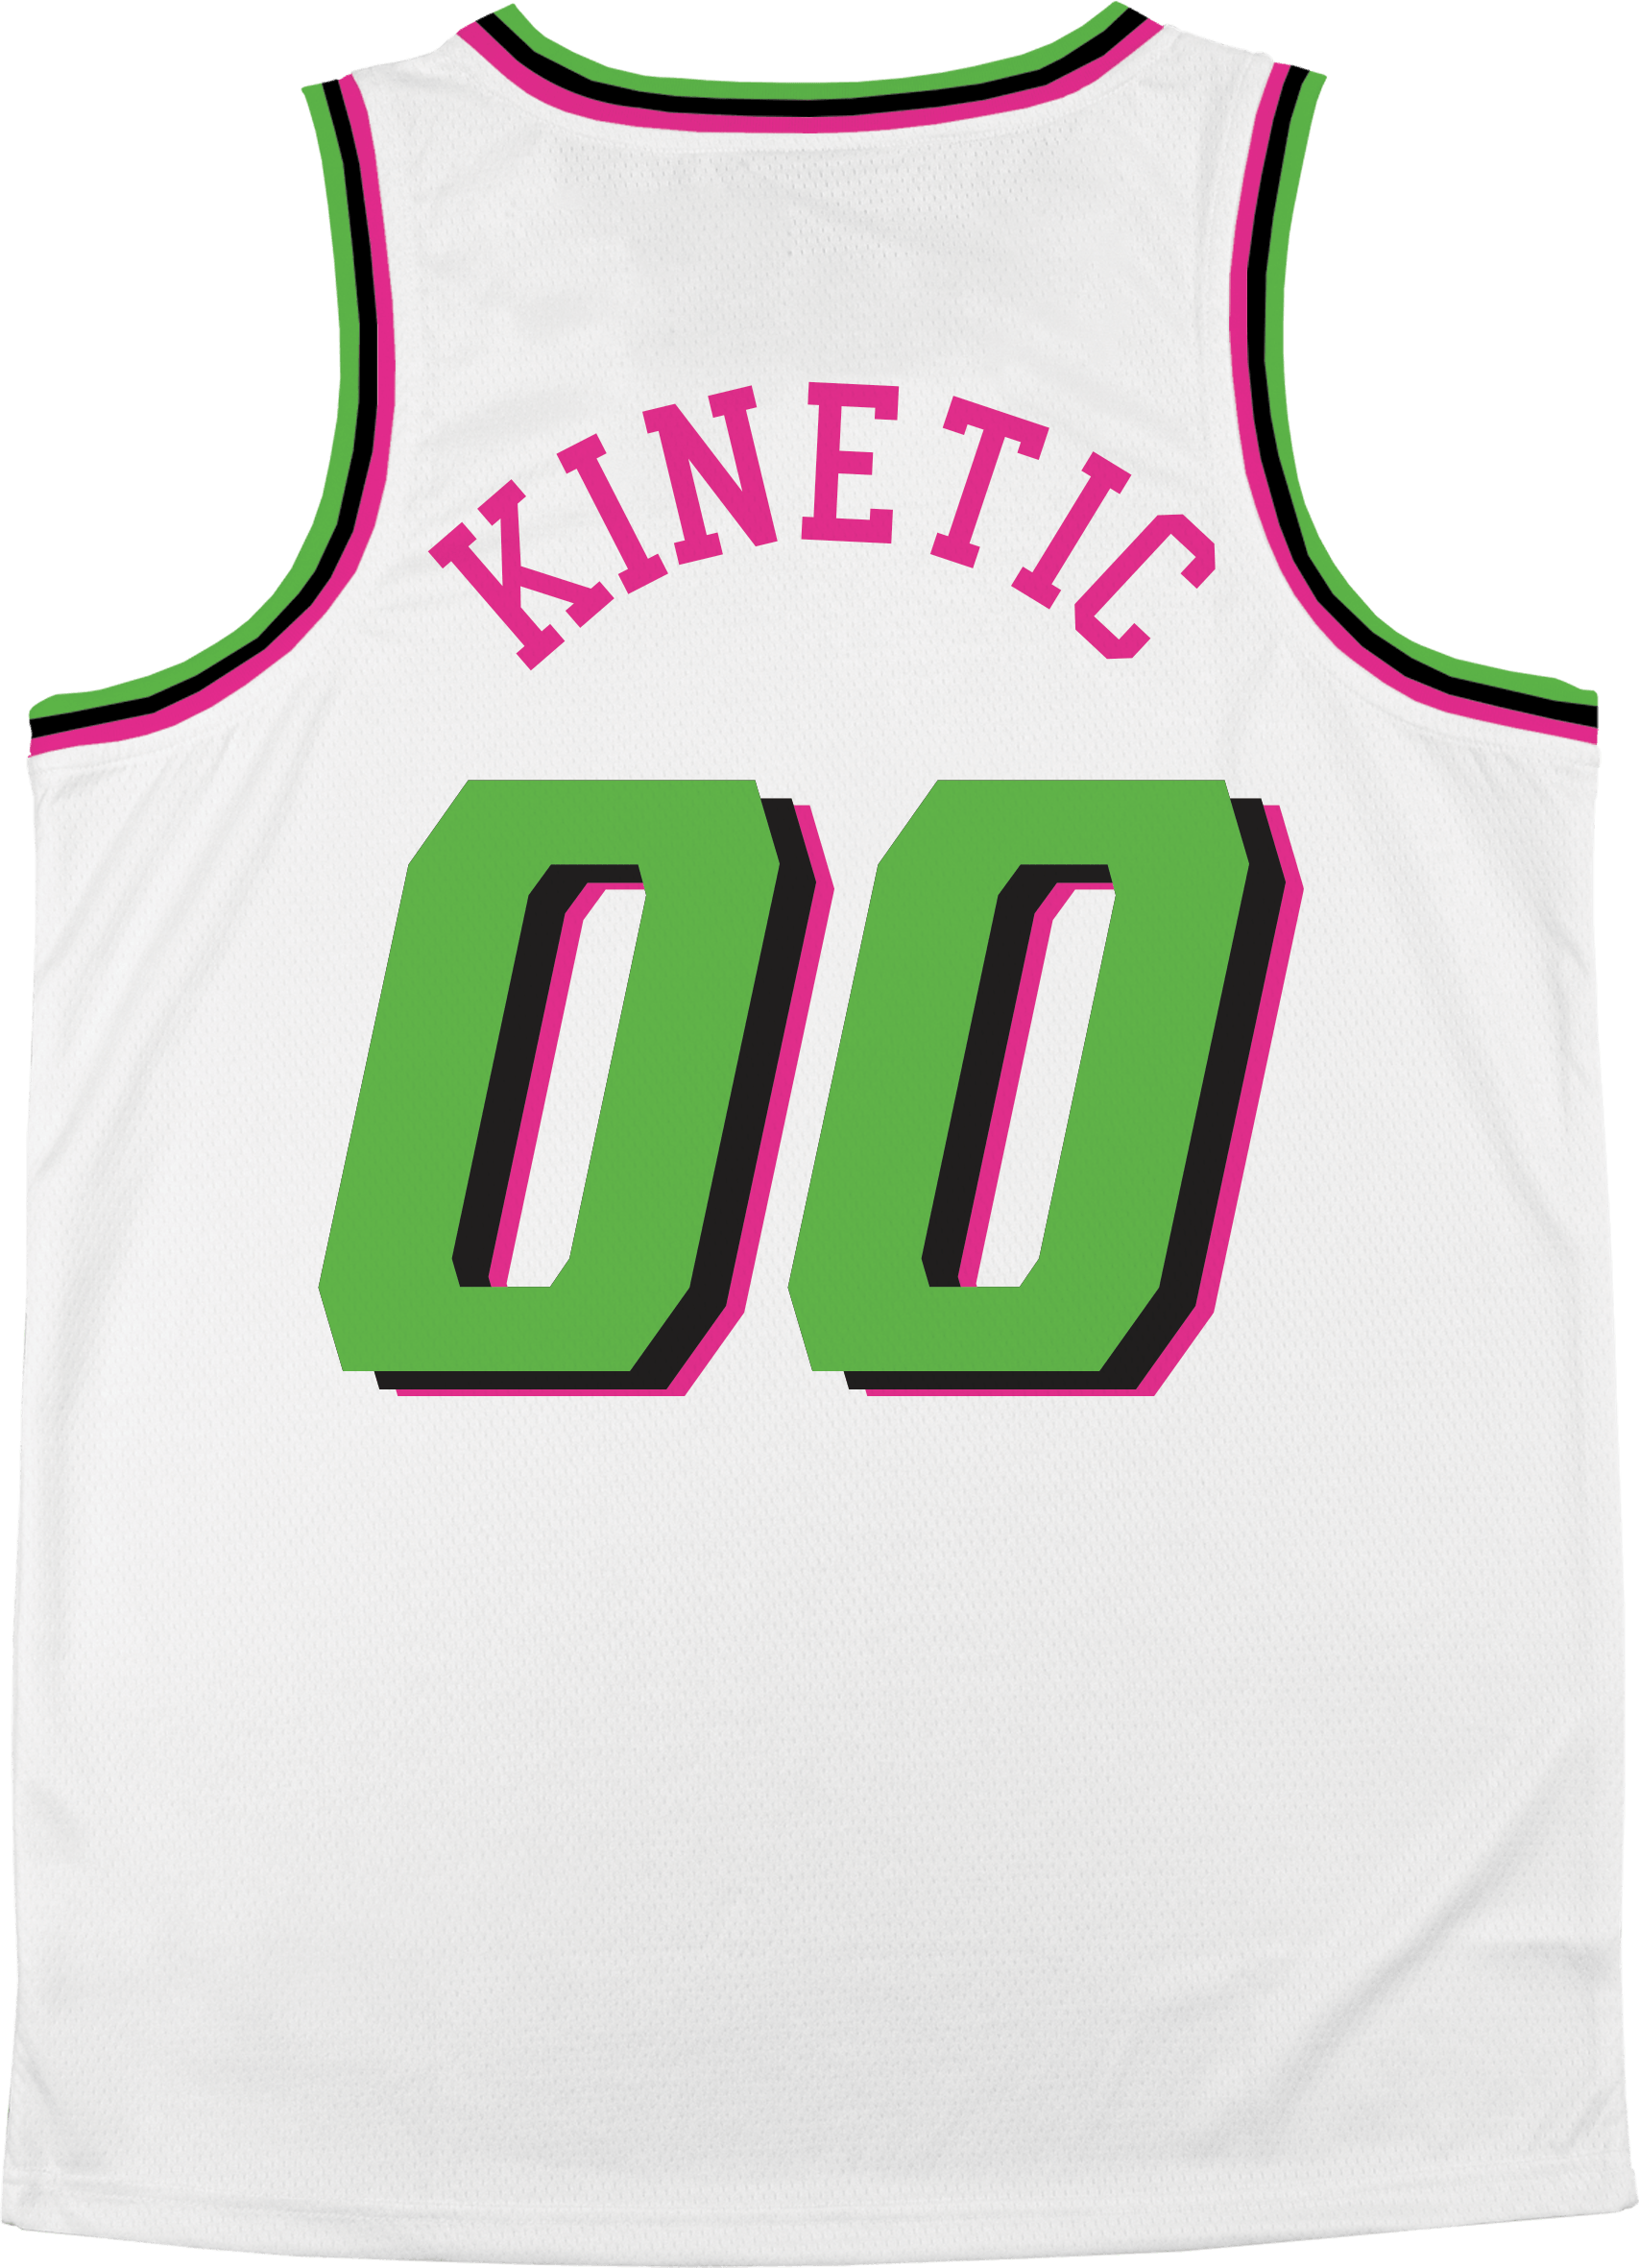 Phi Kappa Psi - Bubble Gum Basketball Jersey Premium Basketball Kinetic Society LLC 